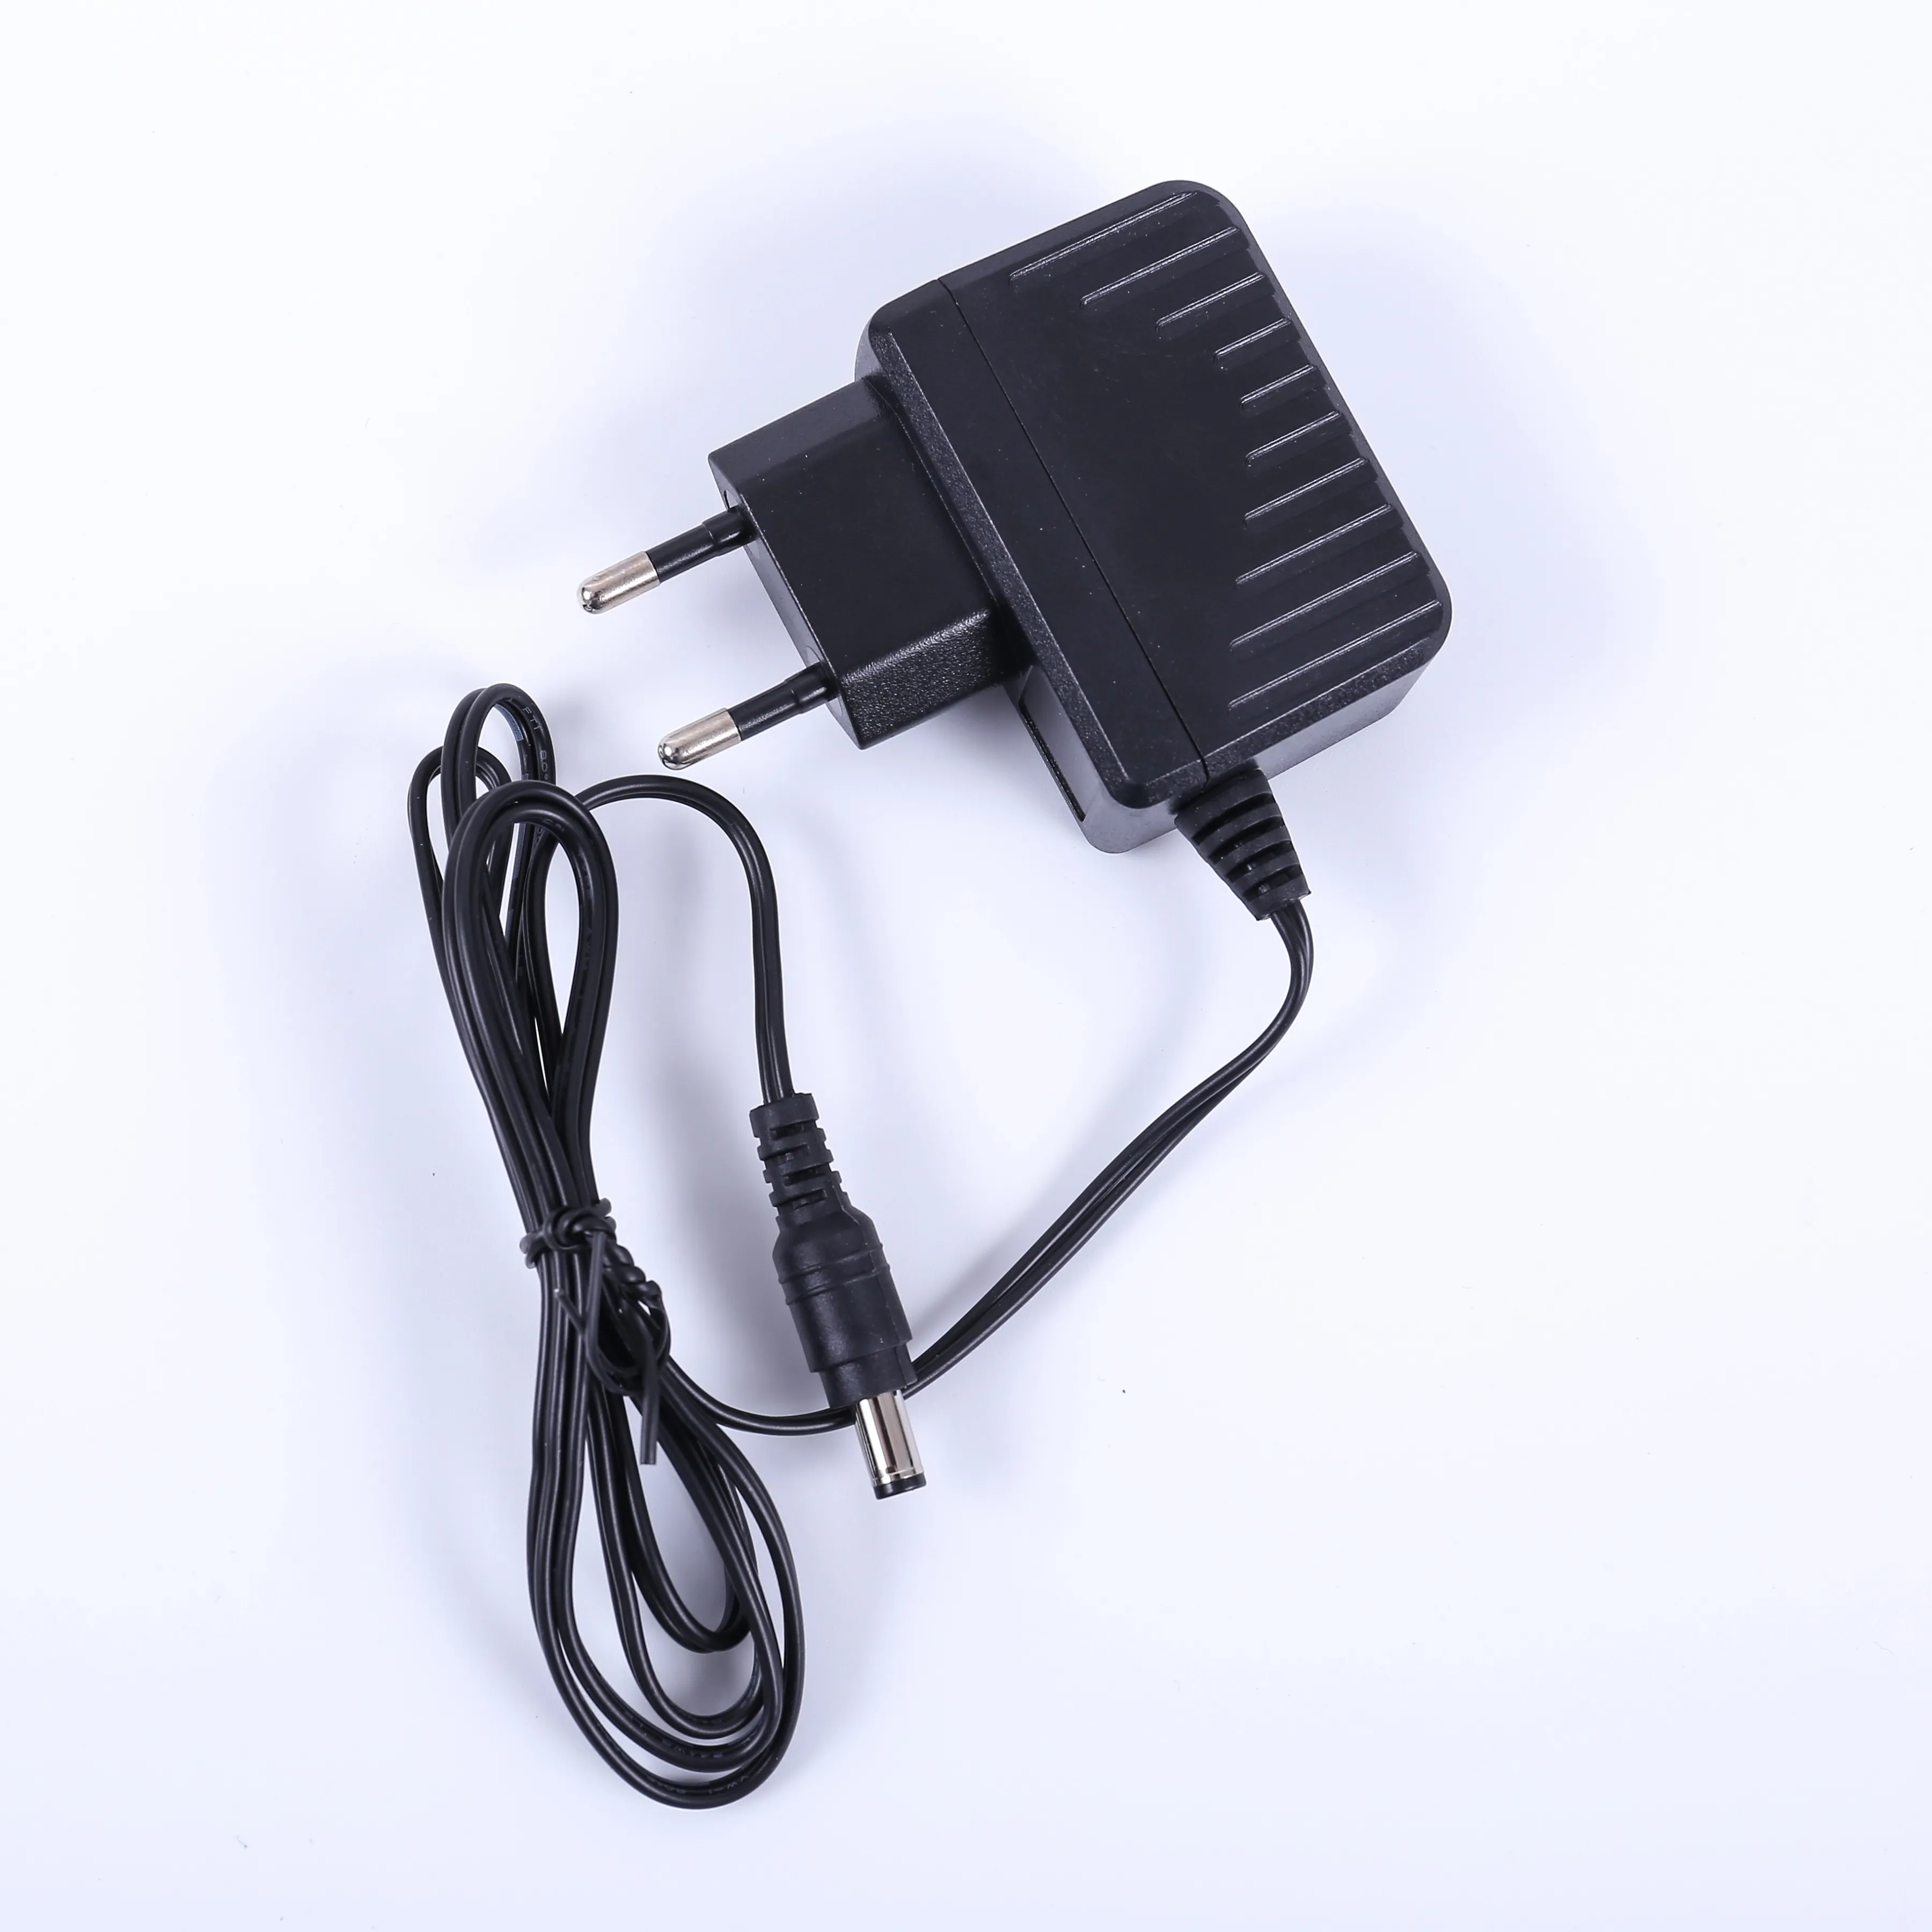 12V1A Universal dc high efficient laptop power adapter car USB